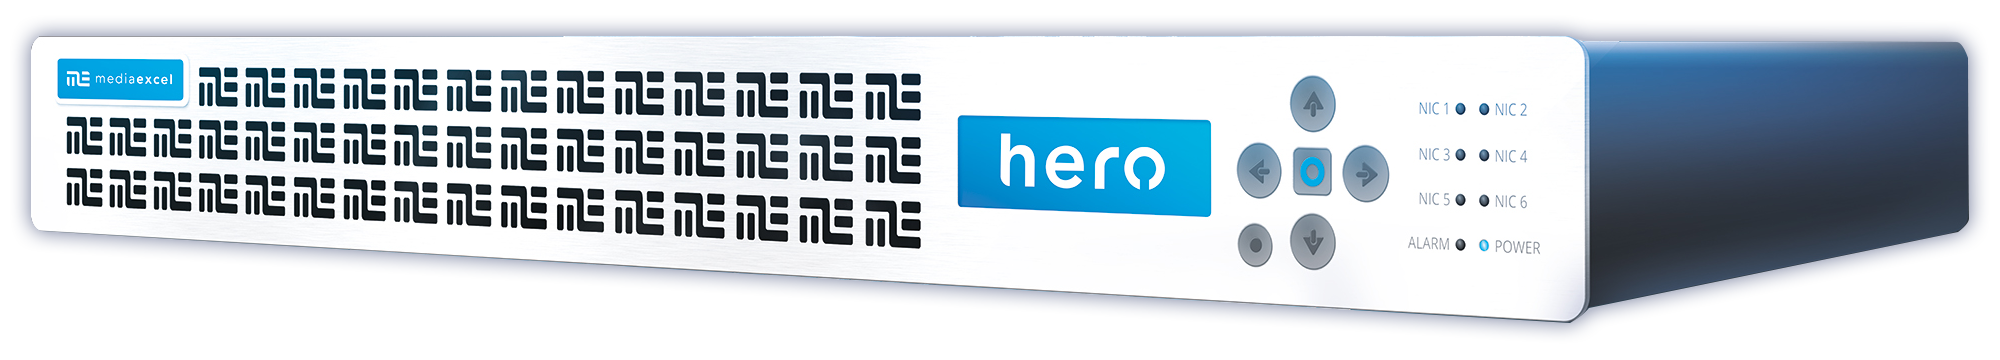 Media Excel HERO 6000